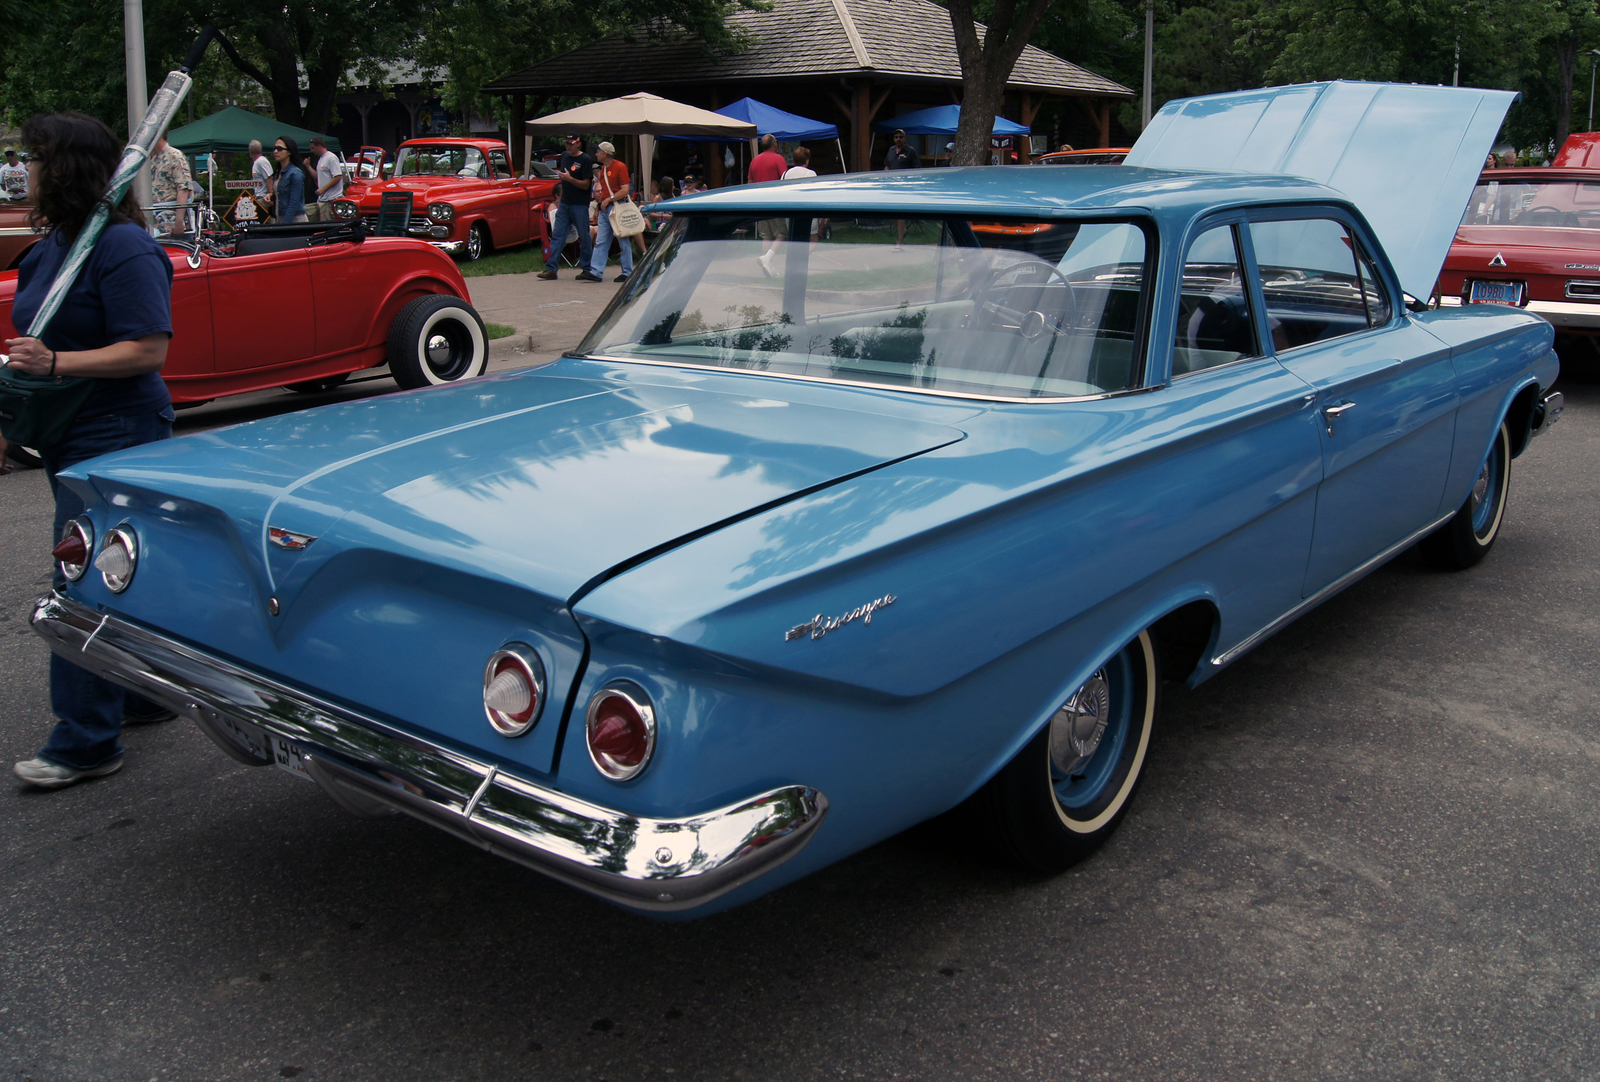 1961_Chevrolet_Biscayne_two-door%2C_rear_right_%28blue%29.jpg